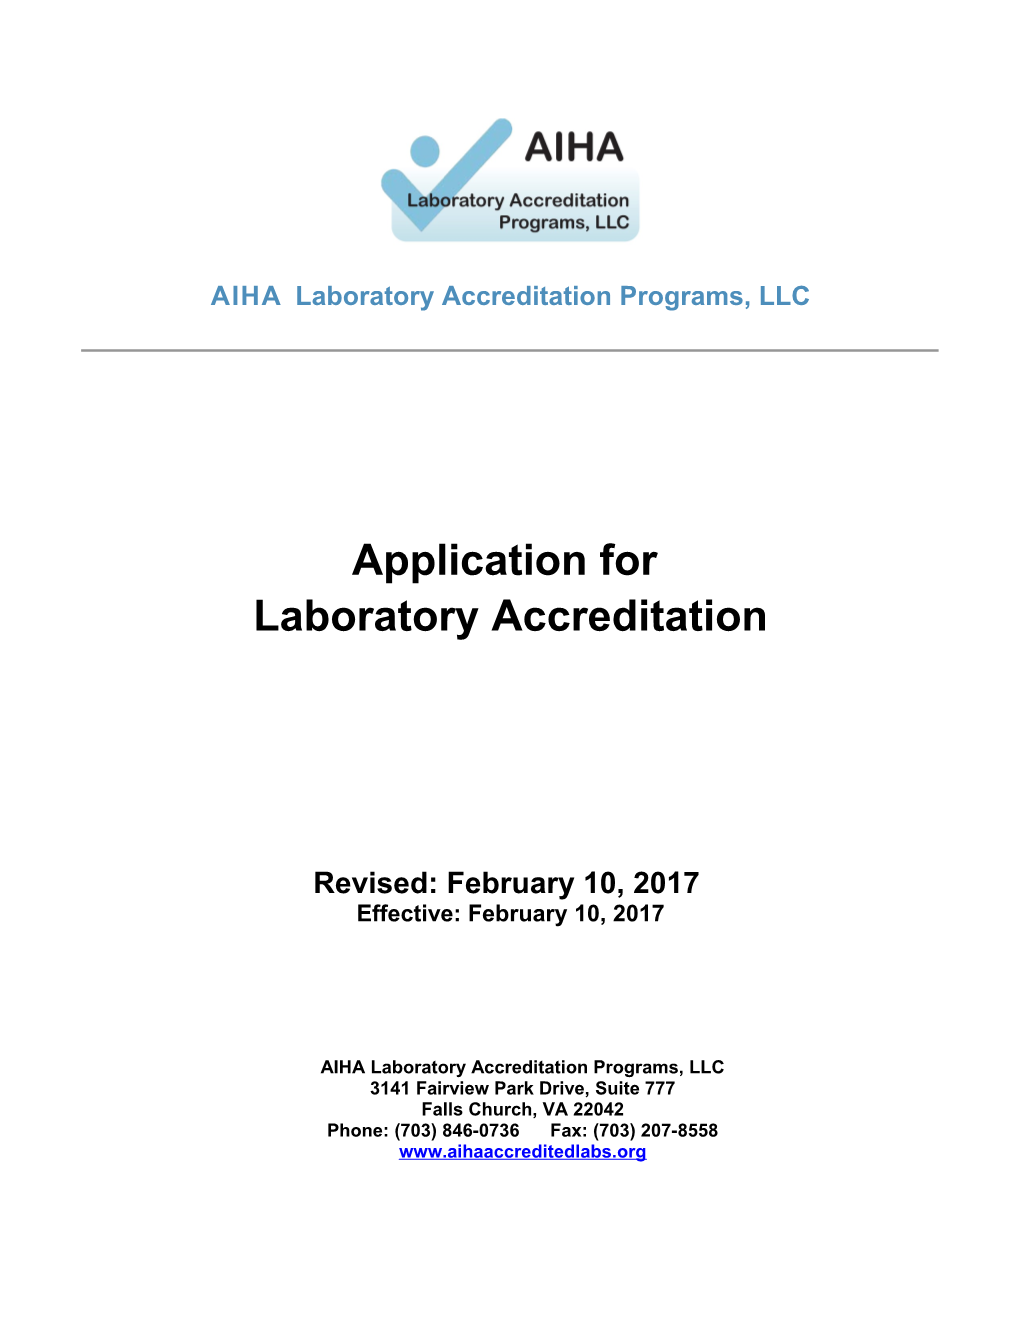 AIHA Laboratory Accreditation Programs, LLC